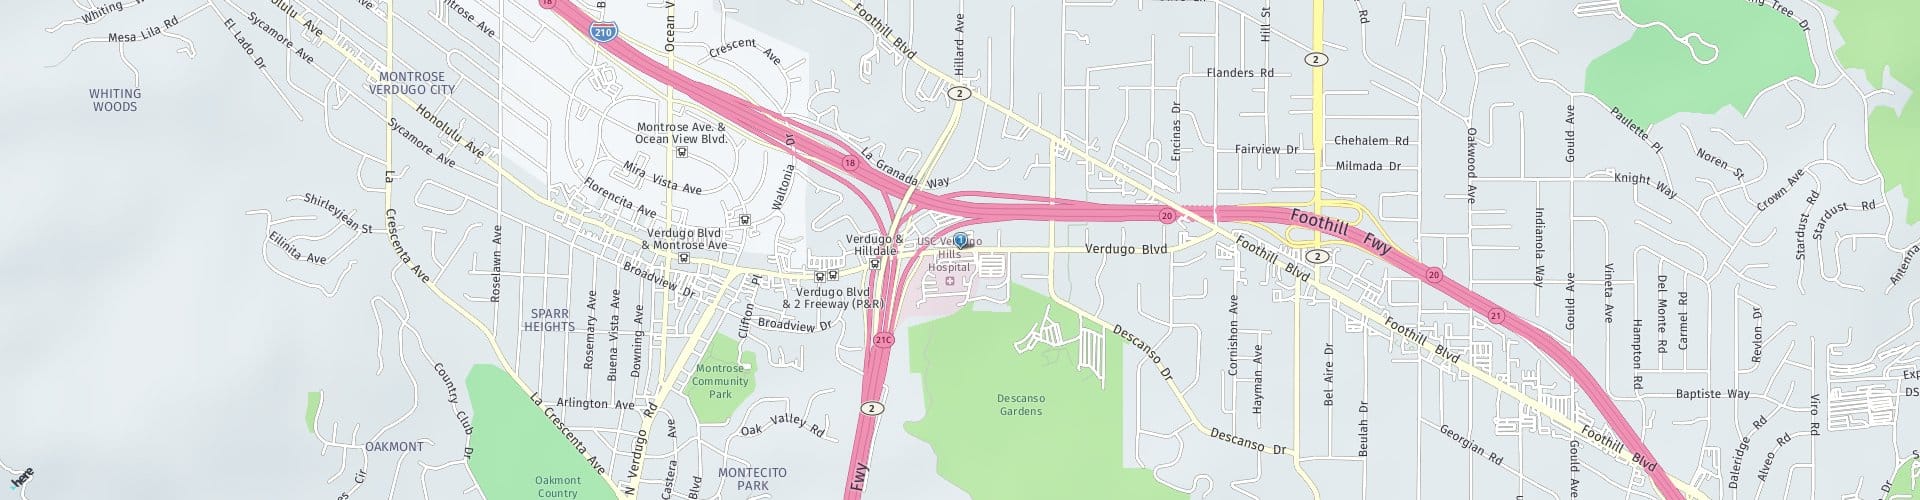 Location Map: 1818 Verdugo Blvd. Glendale - Verdugo Hills, CA 91208